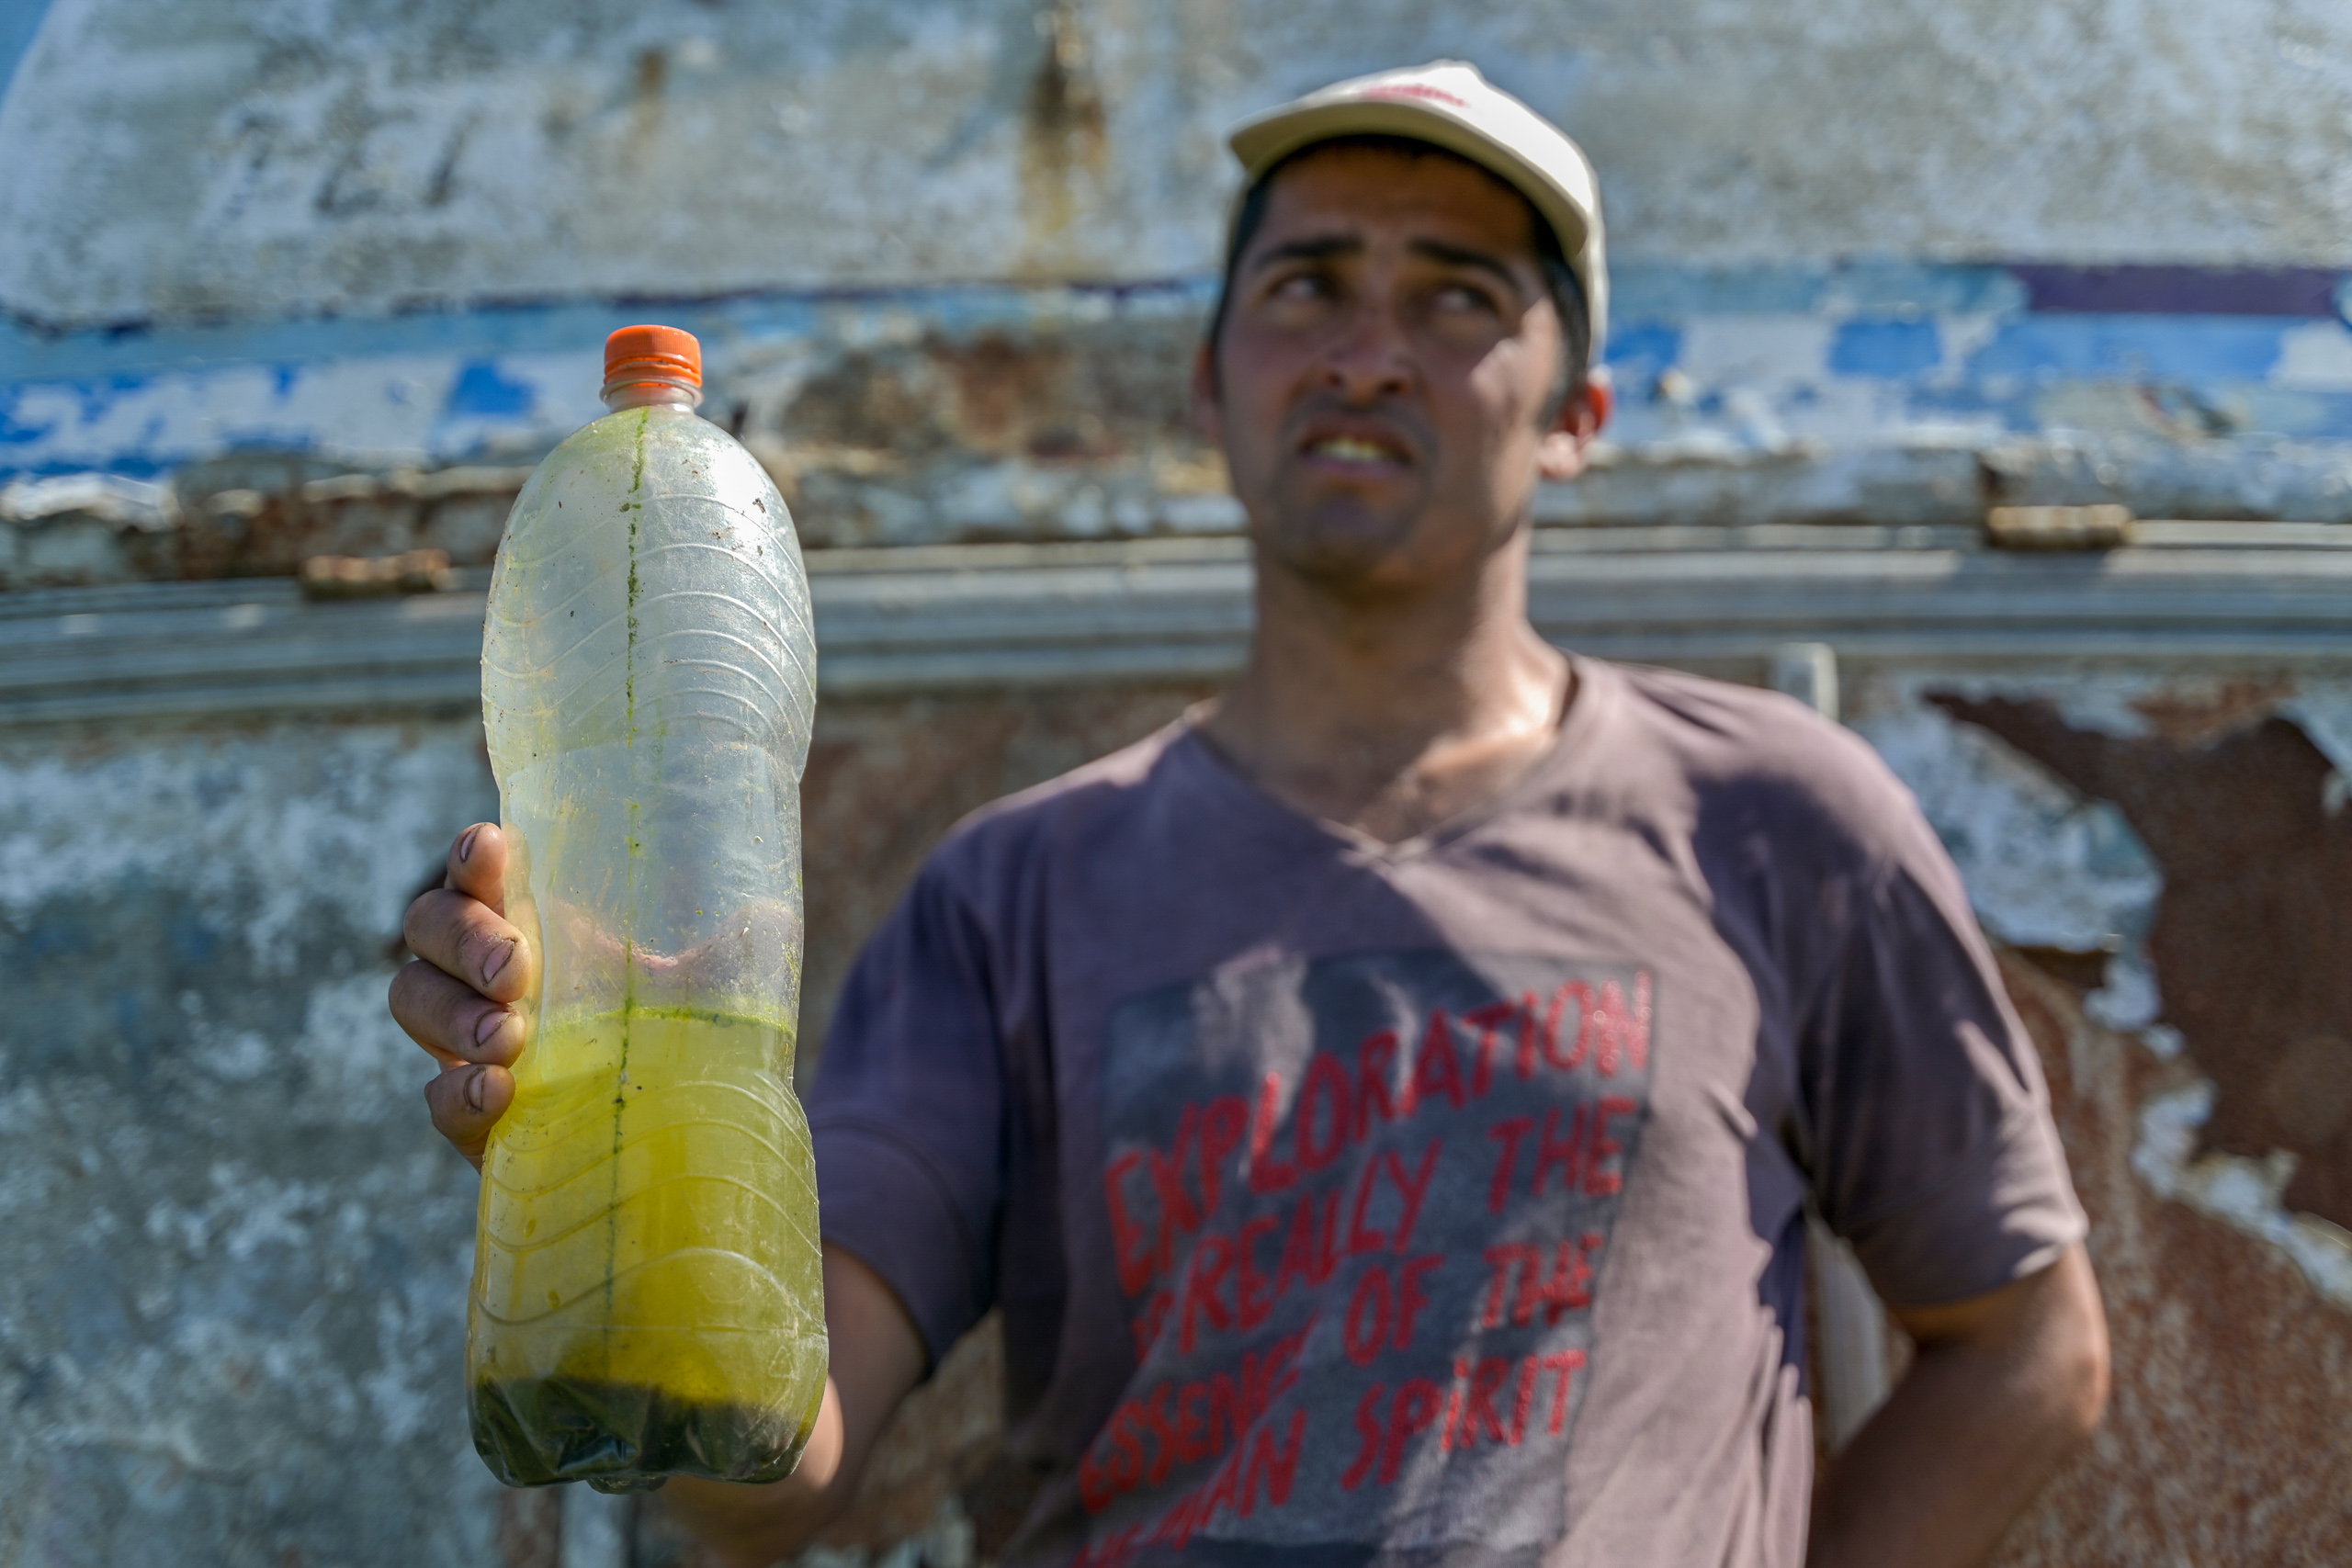 Man holding a plastic bottle of yellowish-green liquid